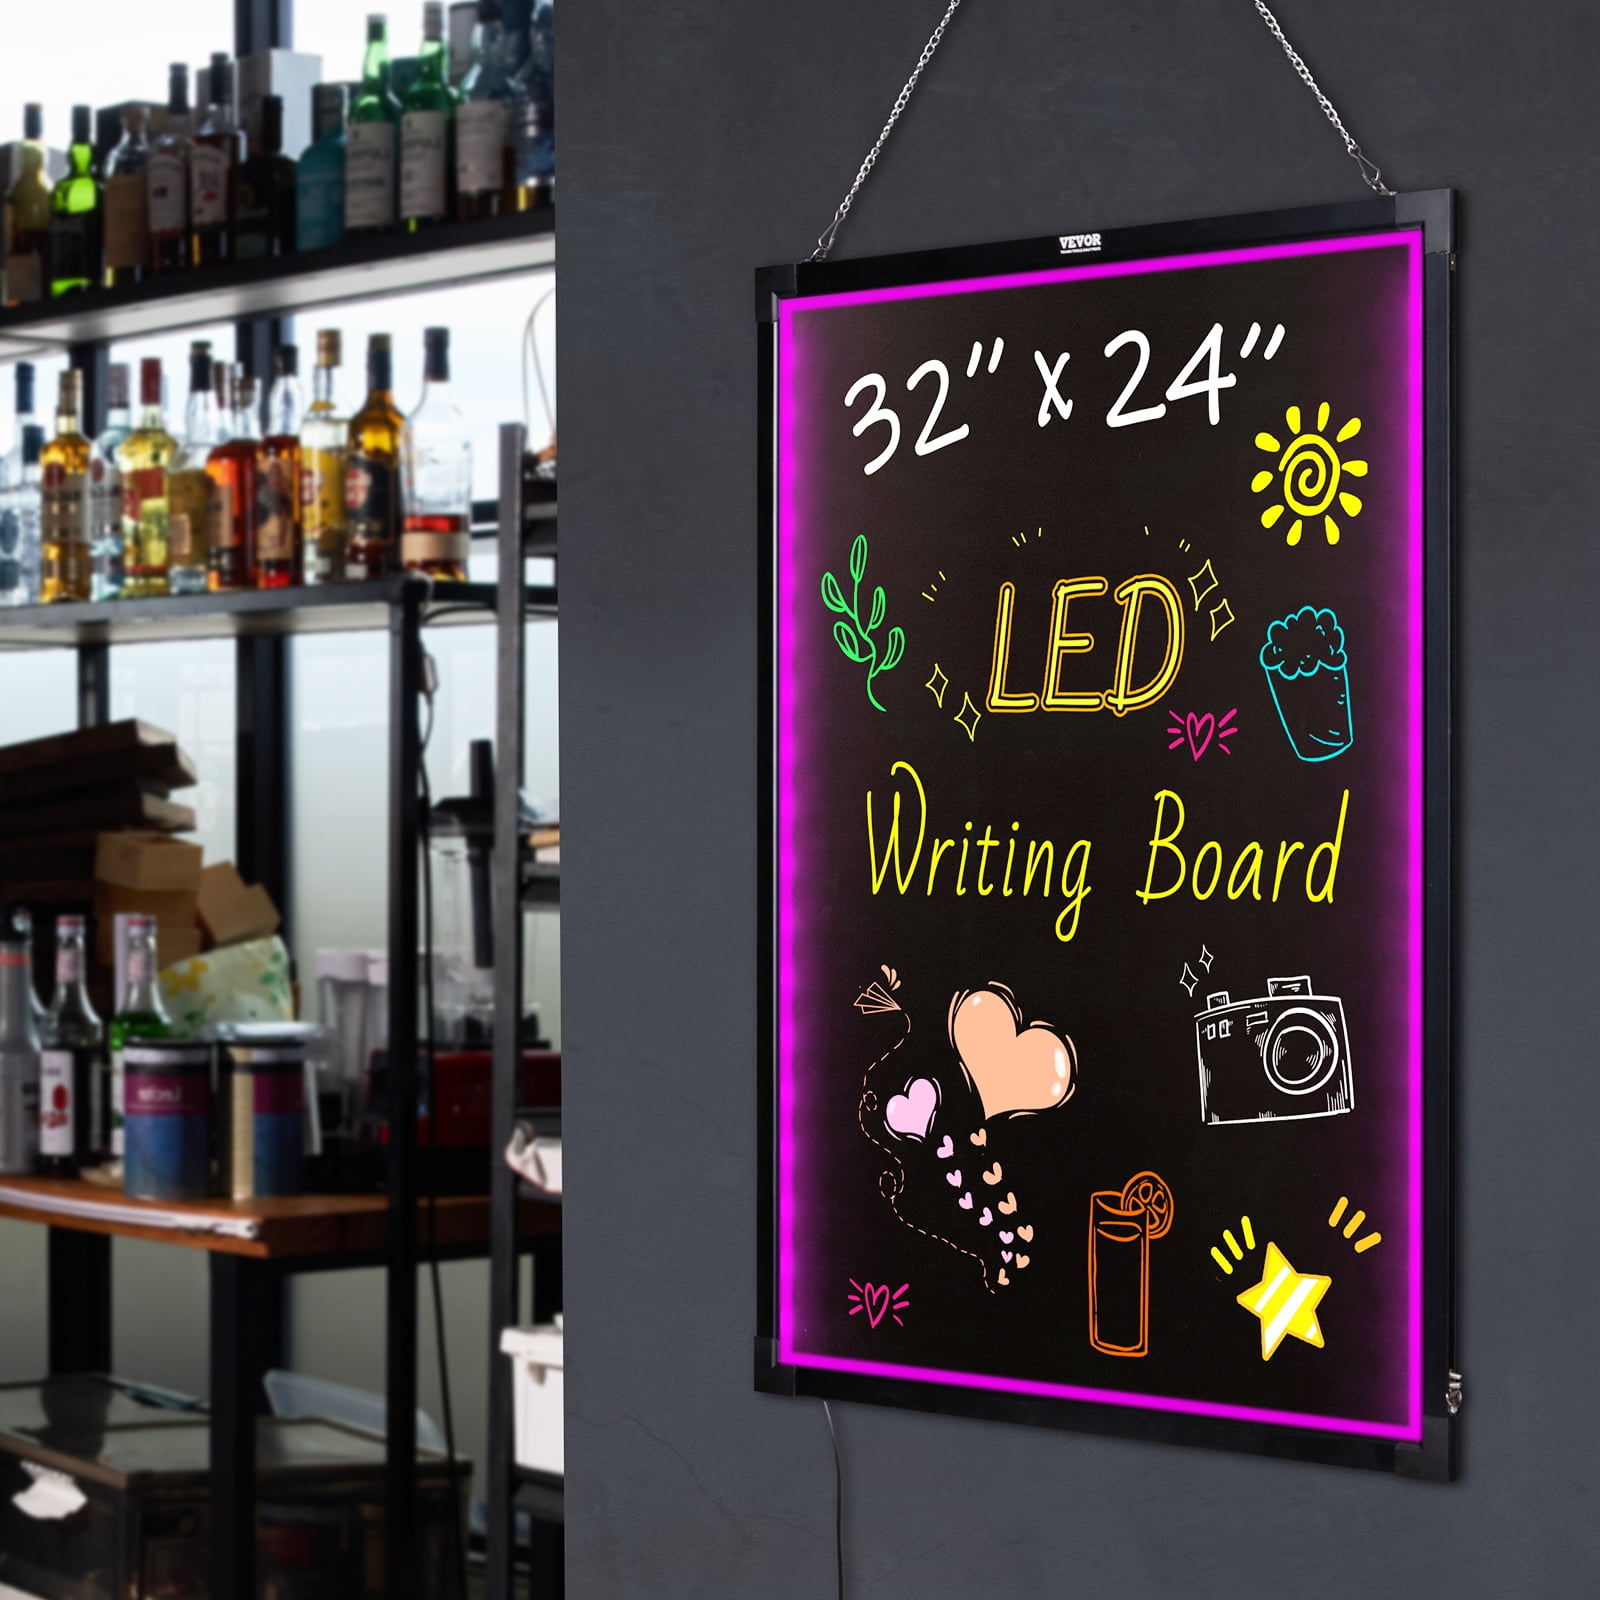 Sensory LED Message Writing Board Illuminated Drawing Painting